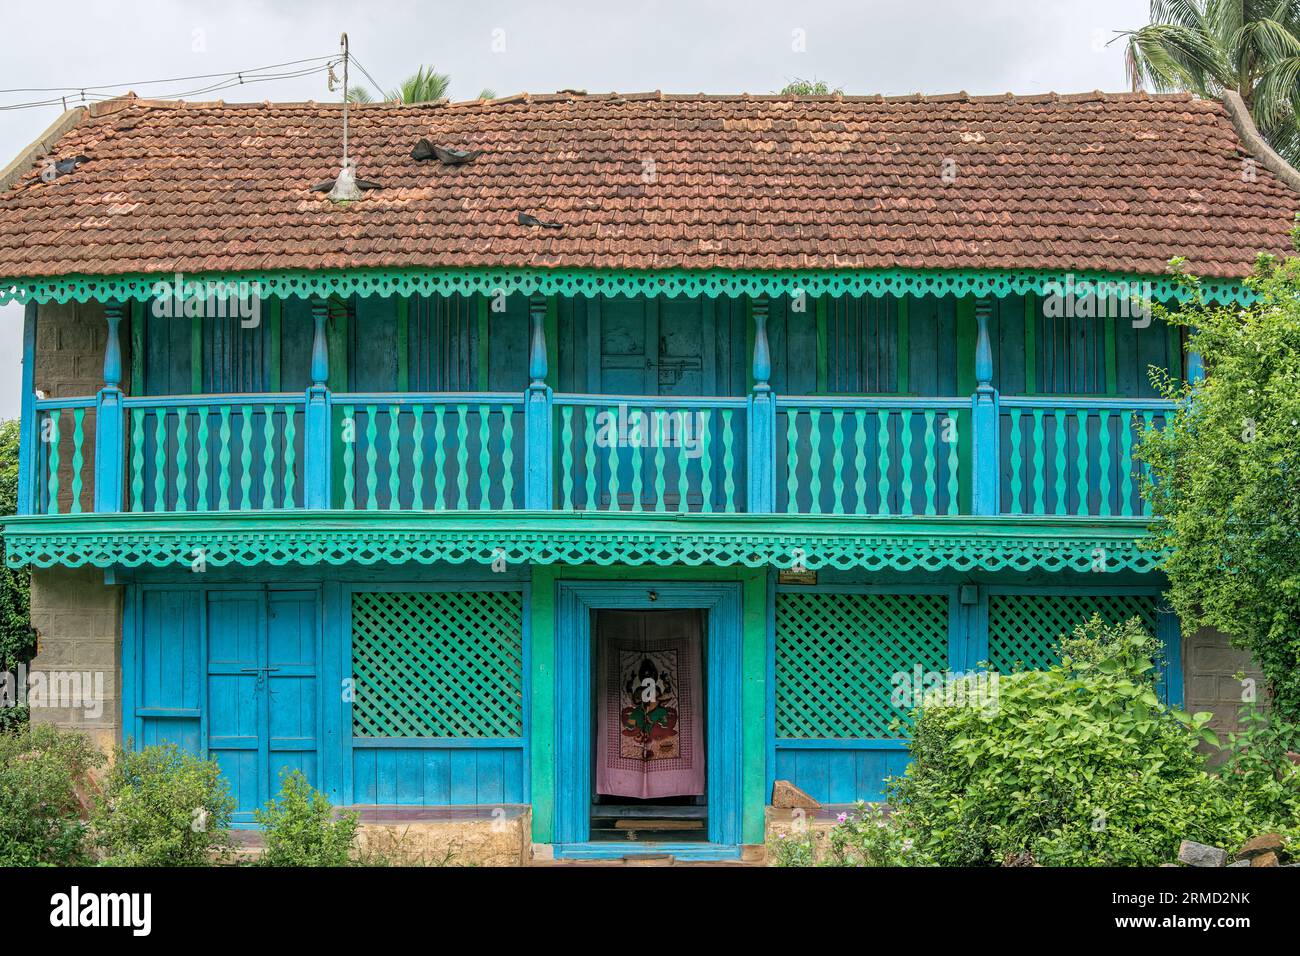 06 12 2013 Mangalore Tiles and Wooden Works village house in Mundgod at Karnataka India Asia Stock Photo